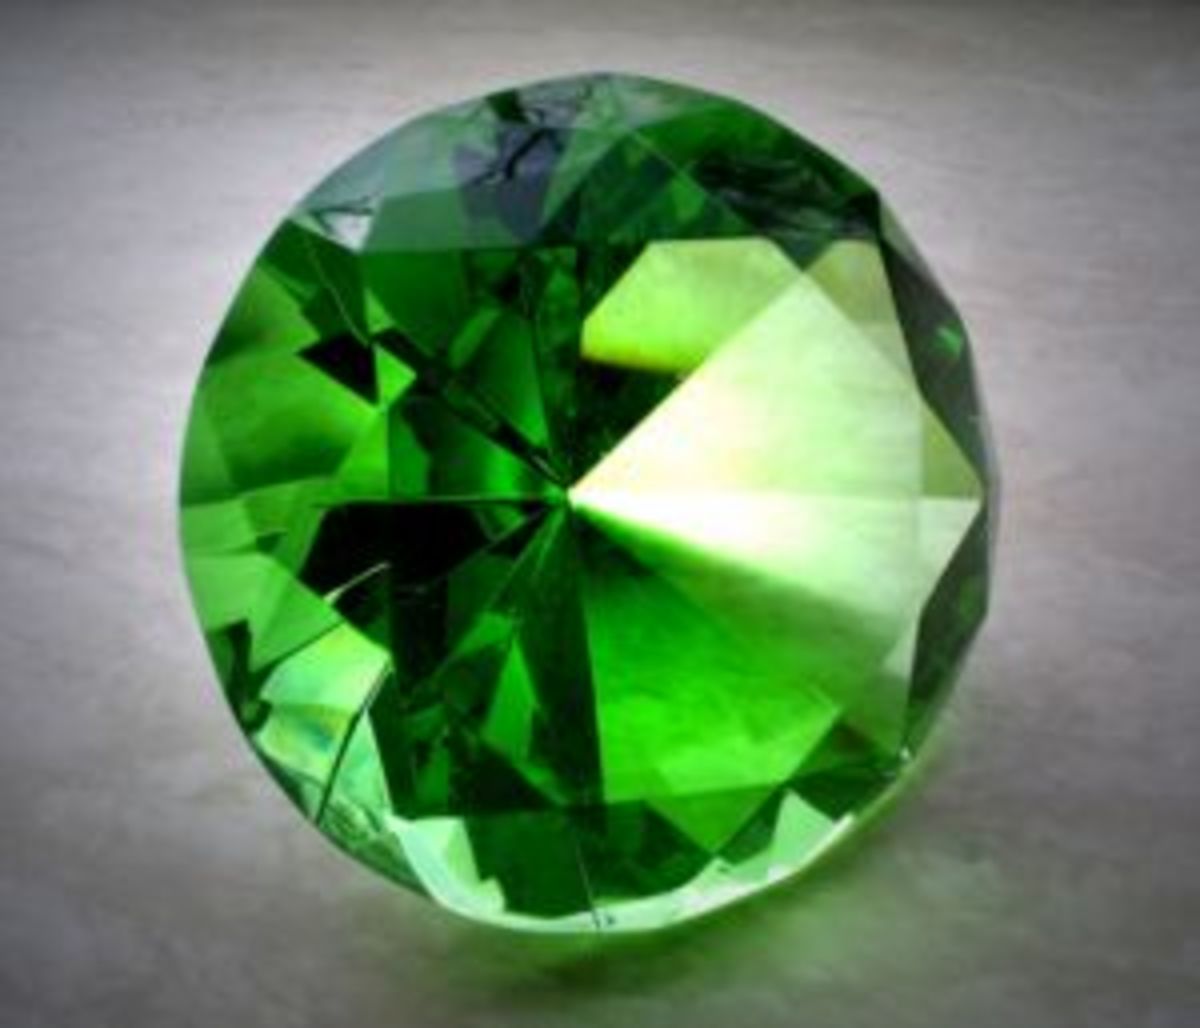 Green Diamond